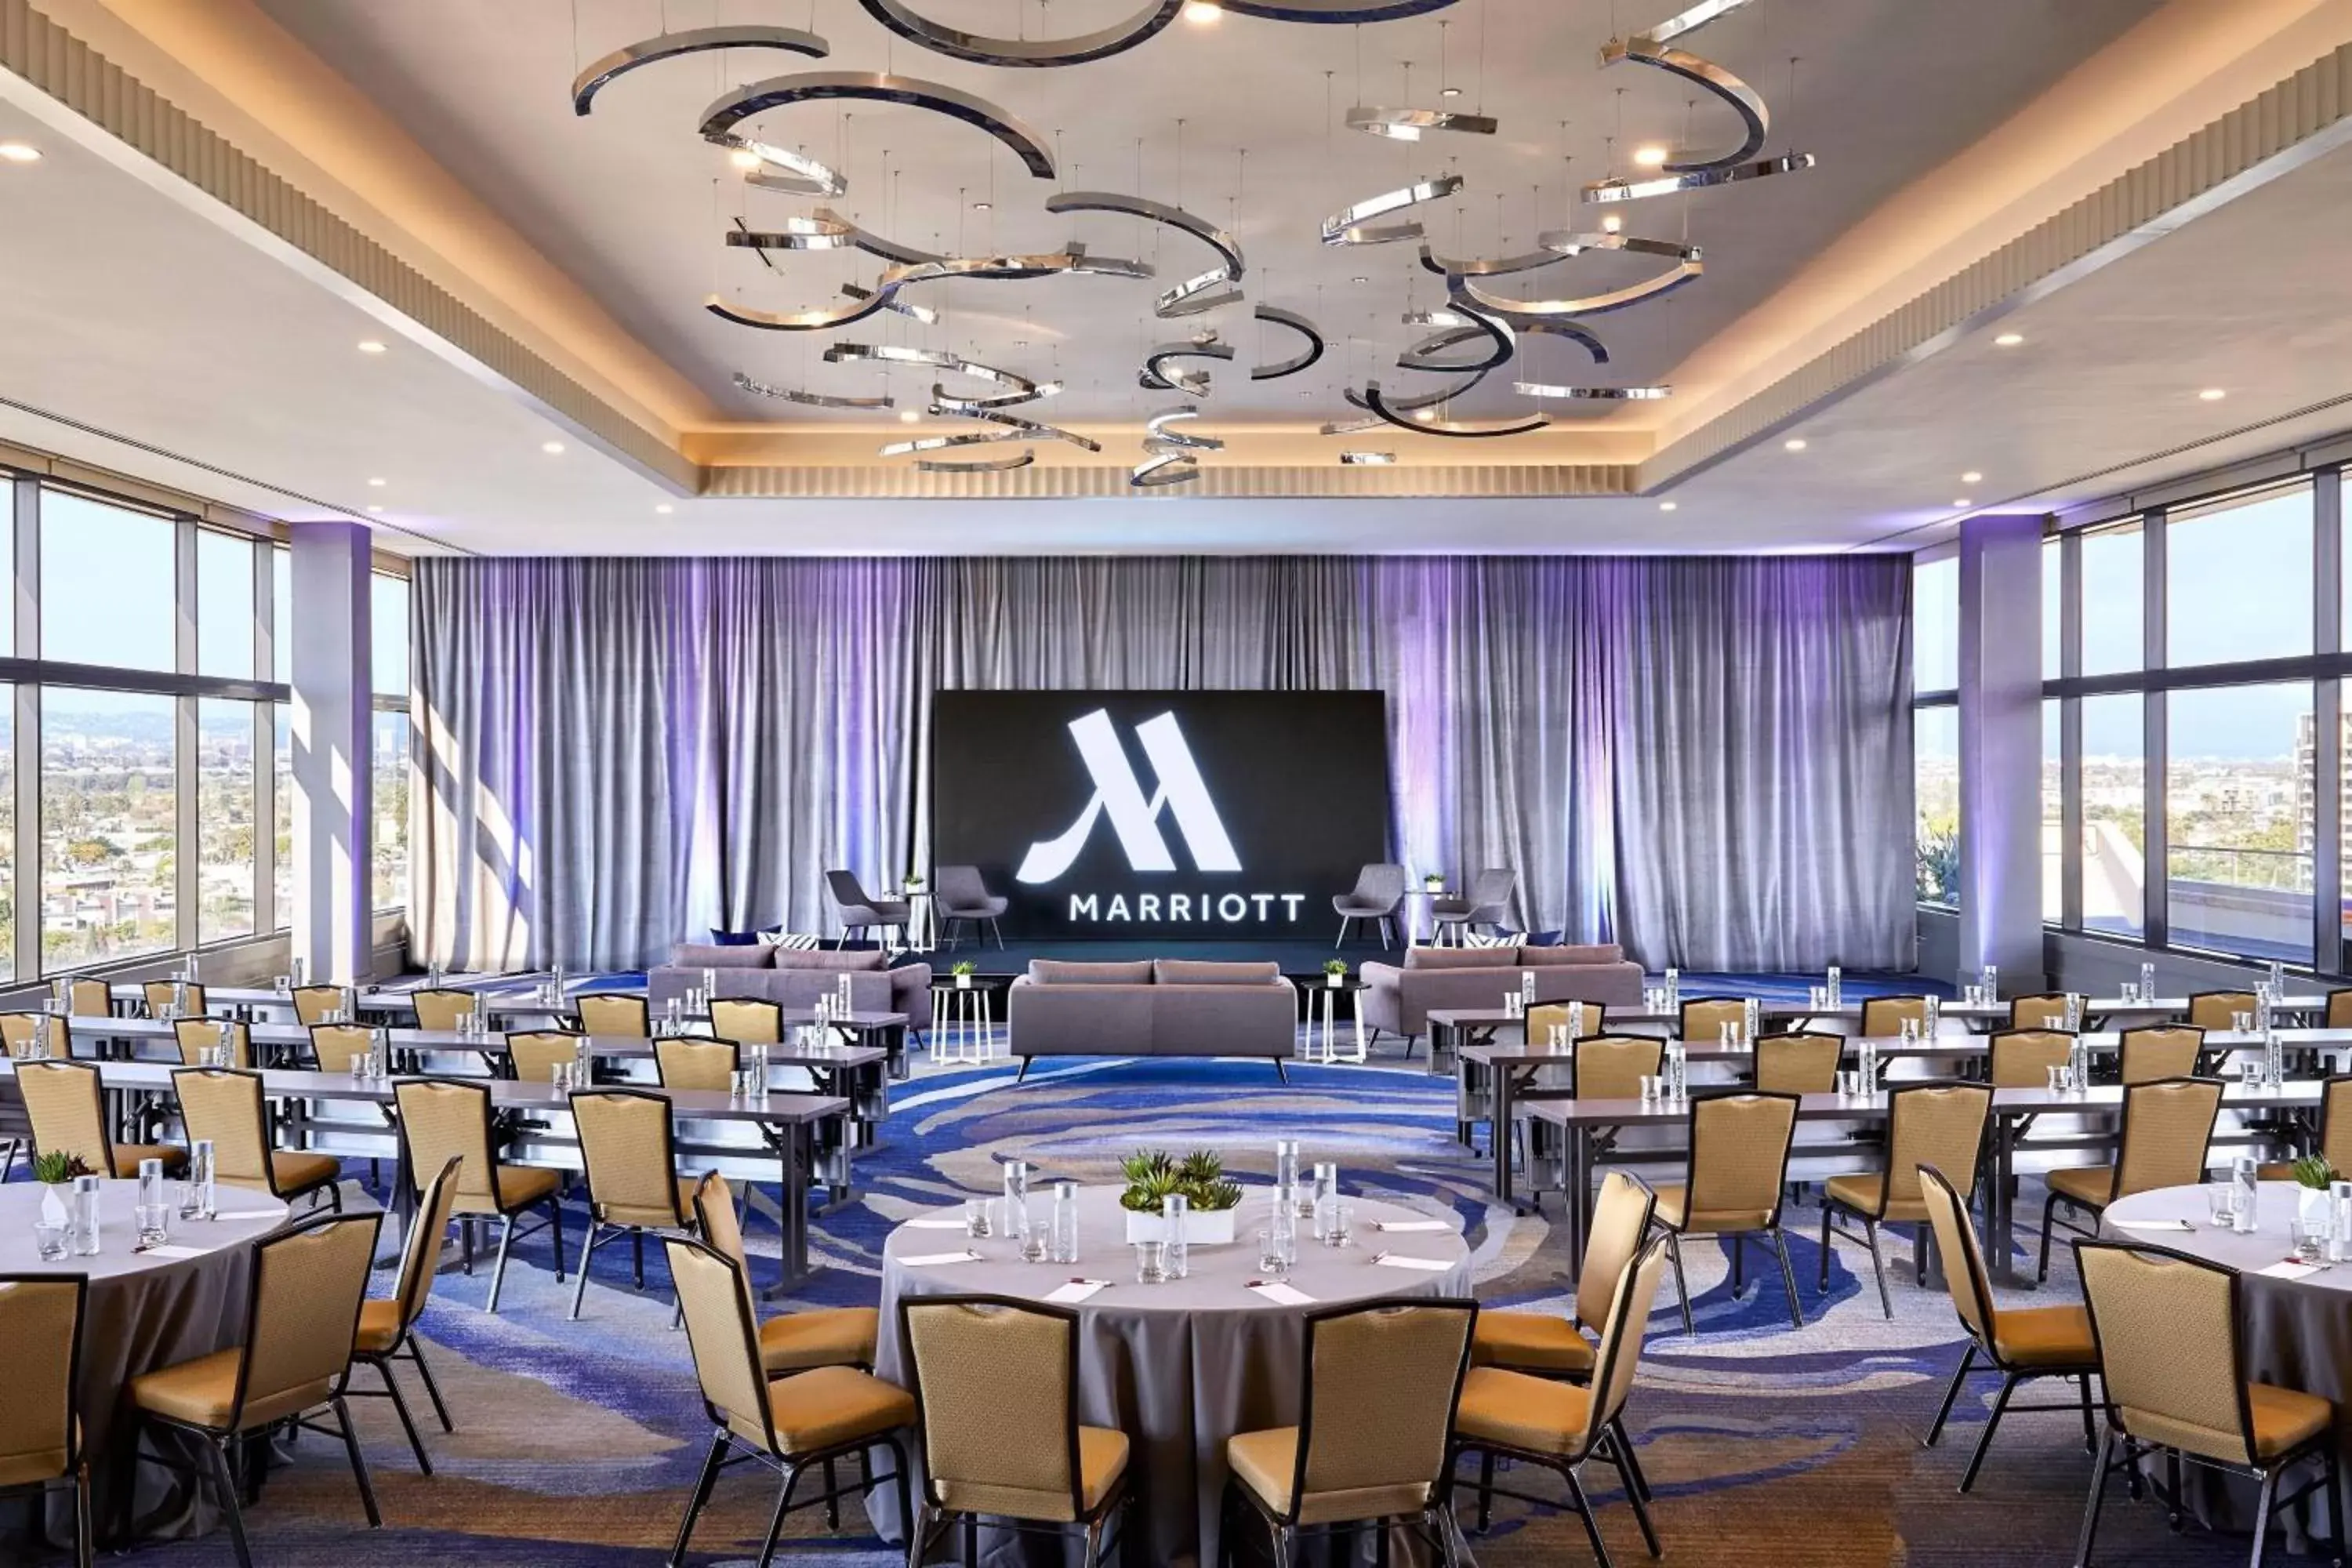 Meeting/conference room, Banquet Facilities in Marina del Rey Marriott